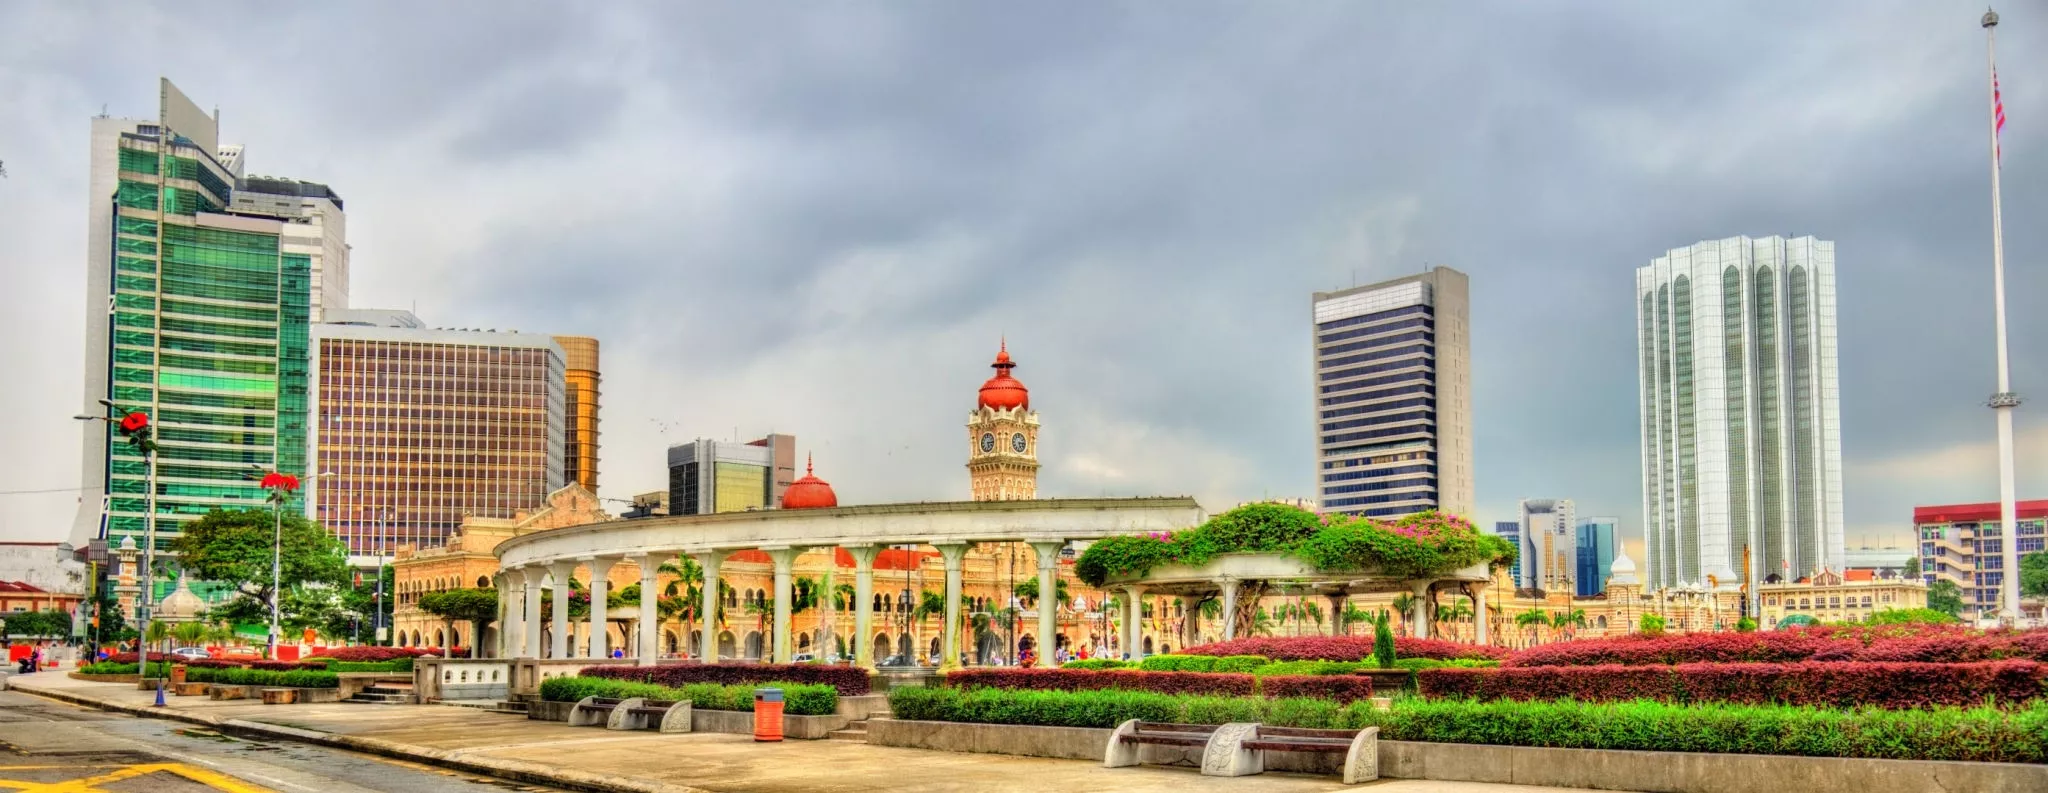 Dataran Merdeka in Malaysia, East Asia | Architecture - Rated 4.2